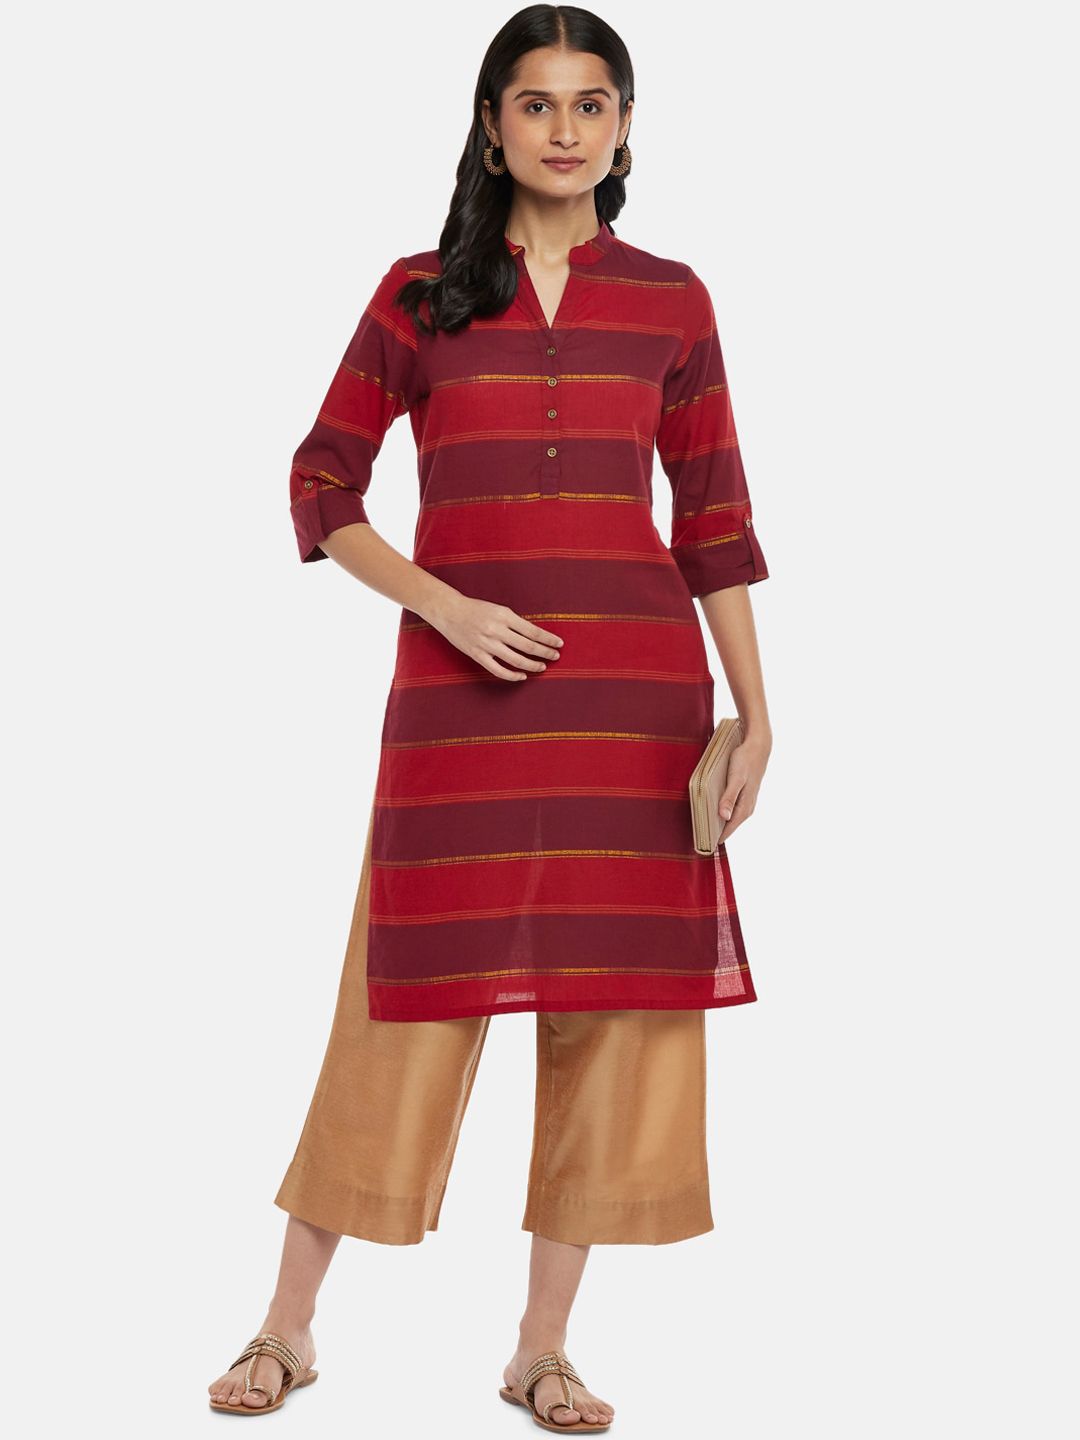 RANGMANCH BY PANTALOONS Women Red Chevron Striped Thread Work Kurta Price in India